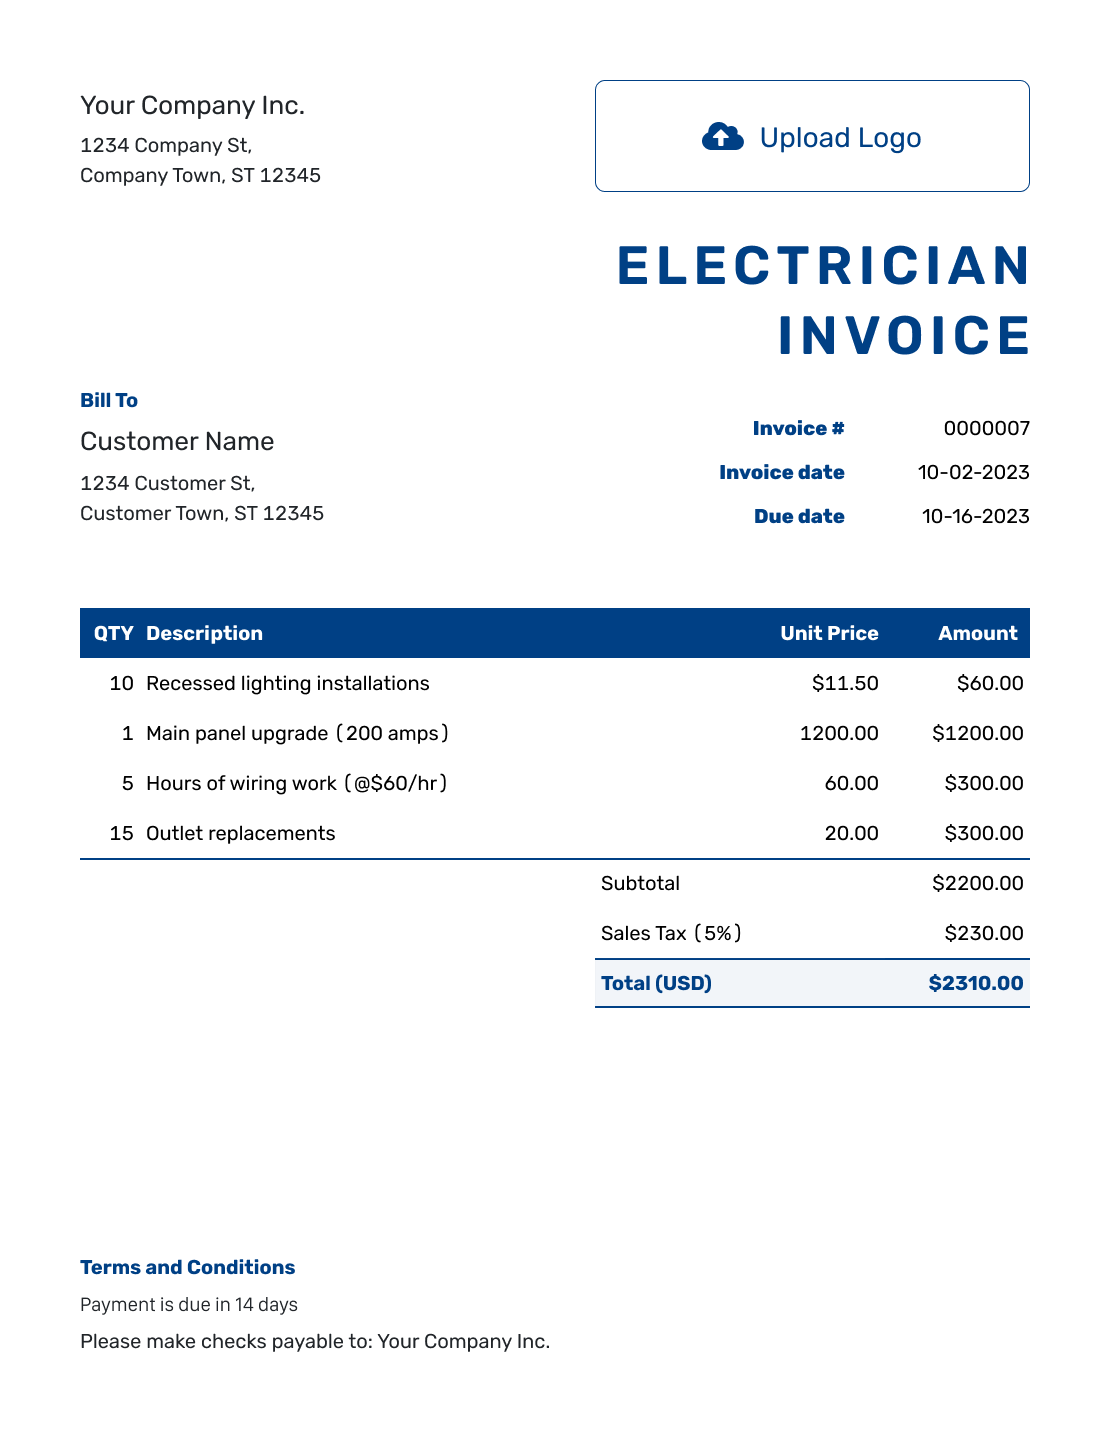 Sample Electrician Invoice Template